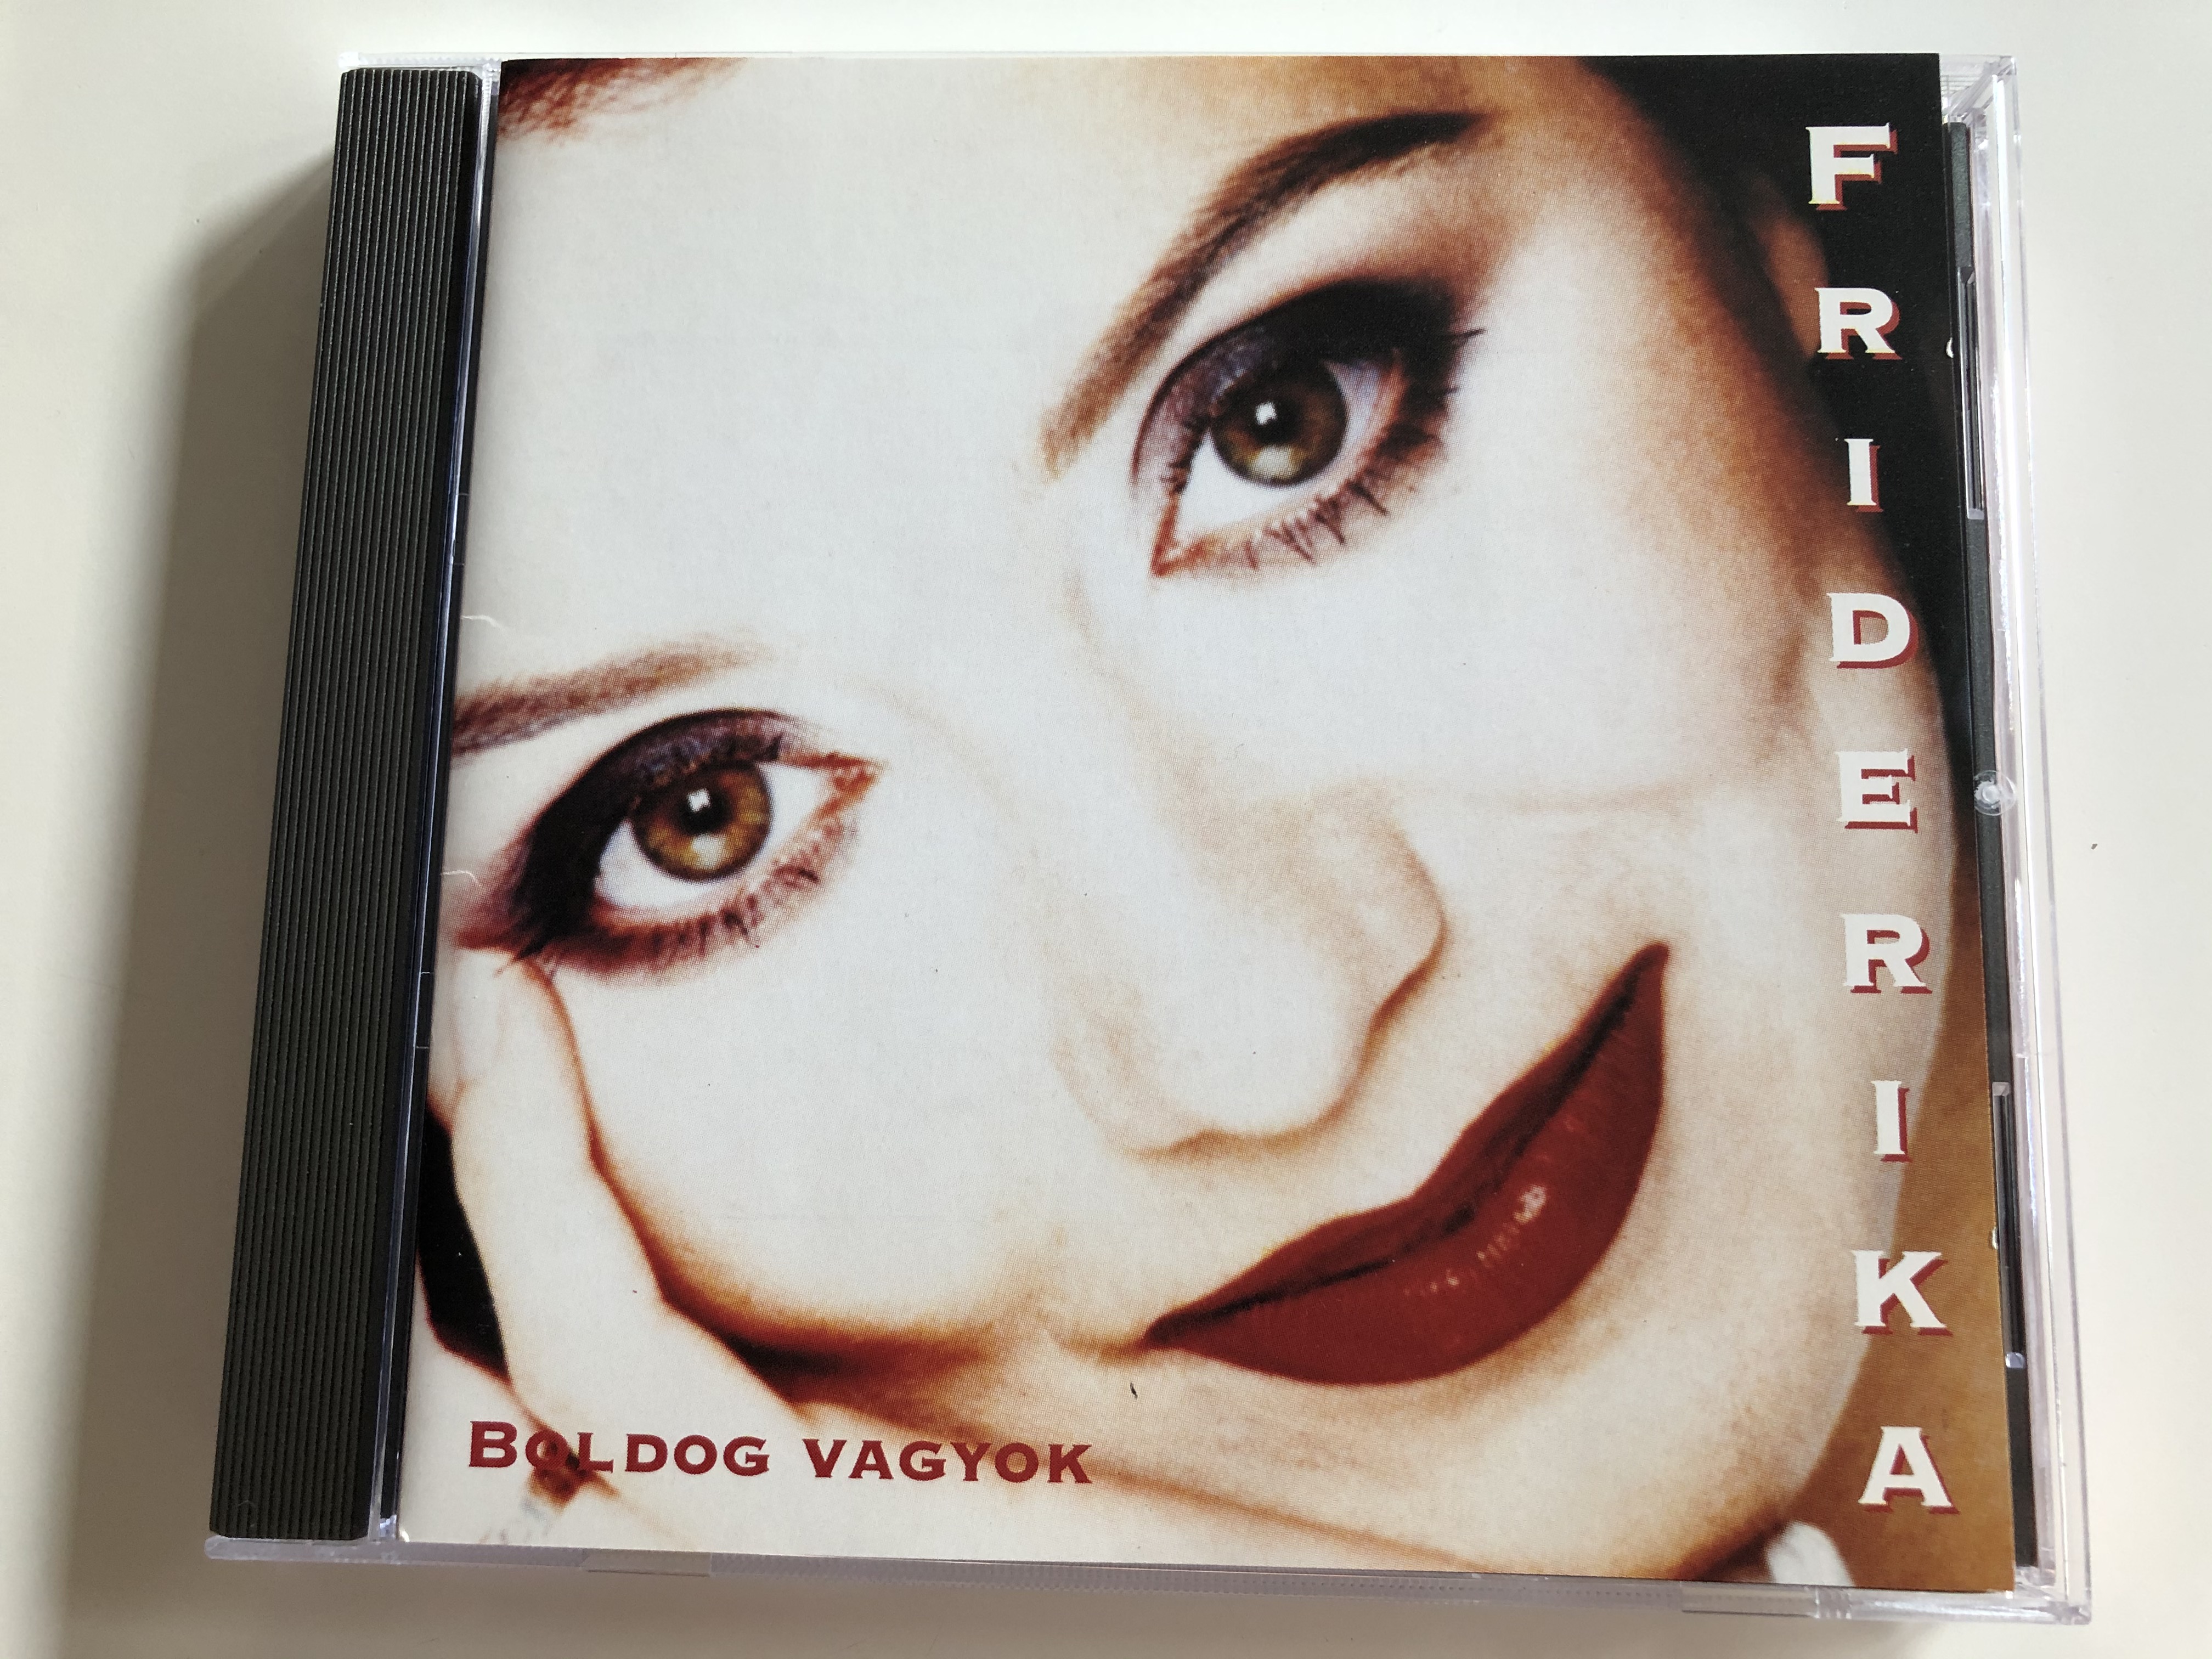 friderika-boldog-vagyok-emi-quint-audio-cd-1998-4-94240-2-1-.jpg